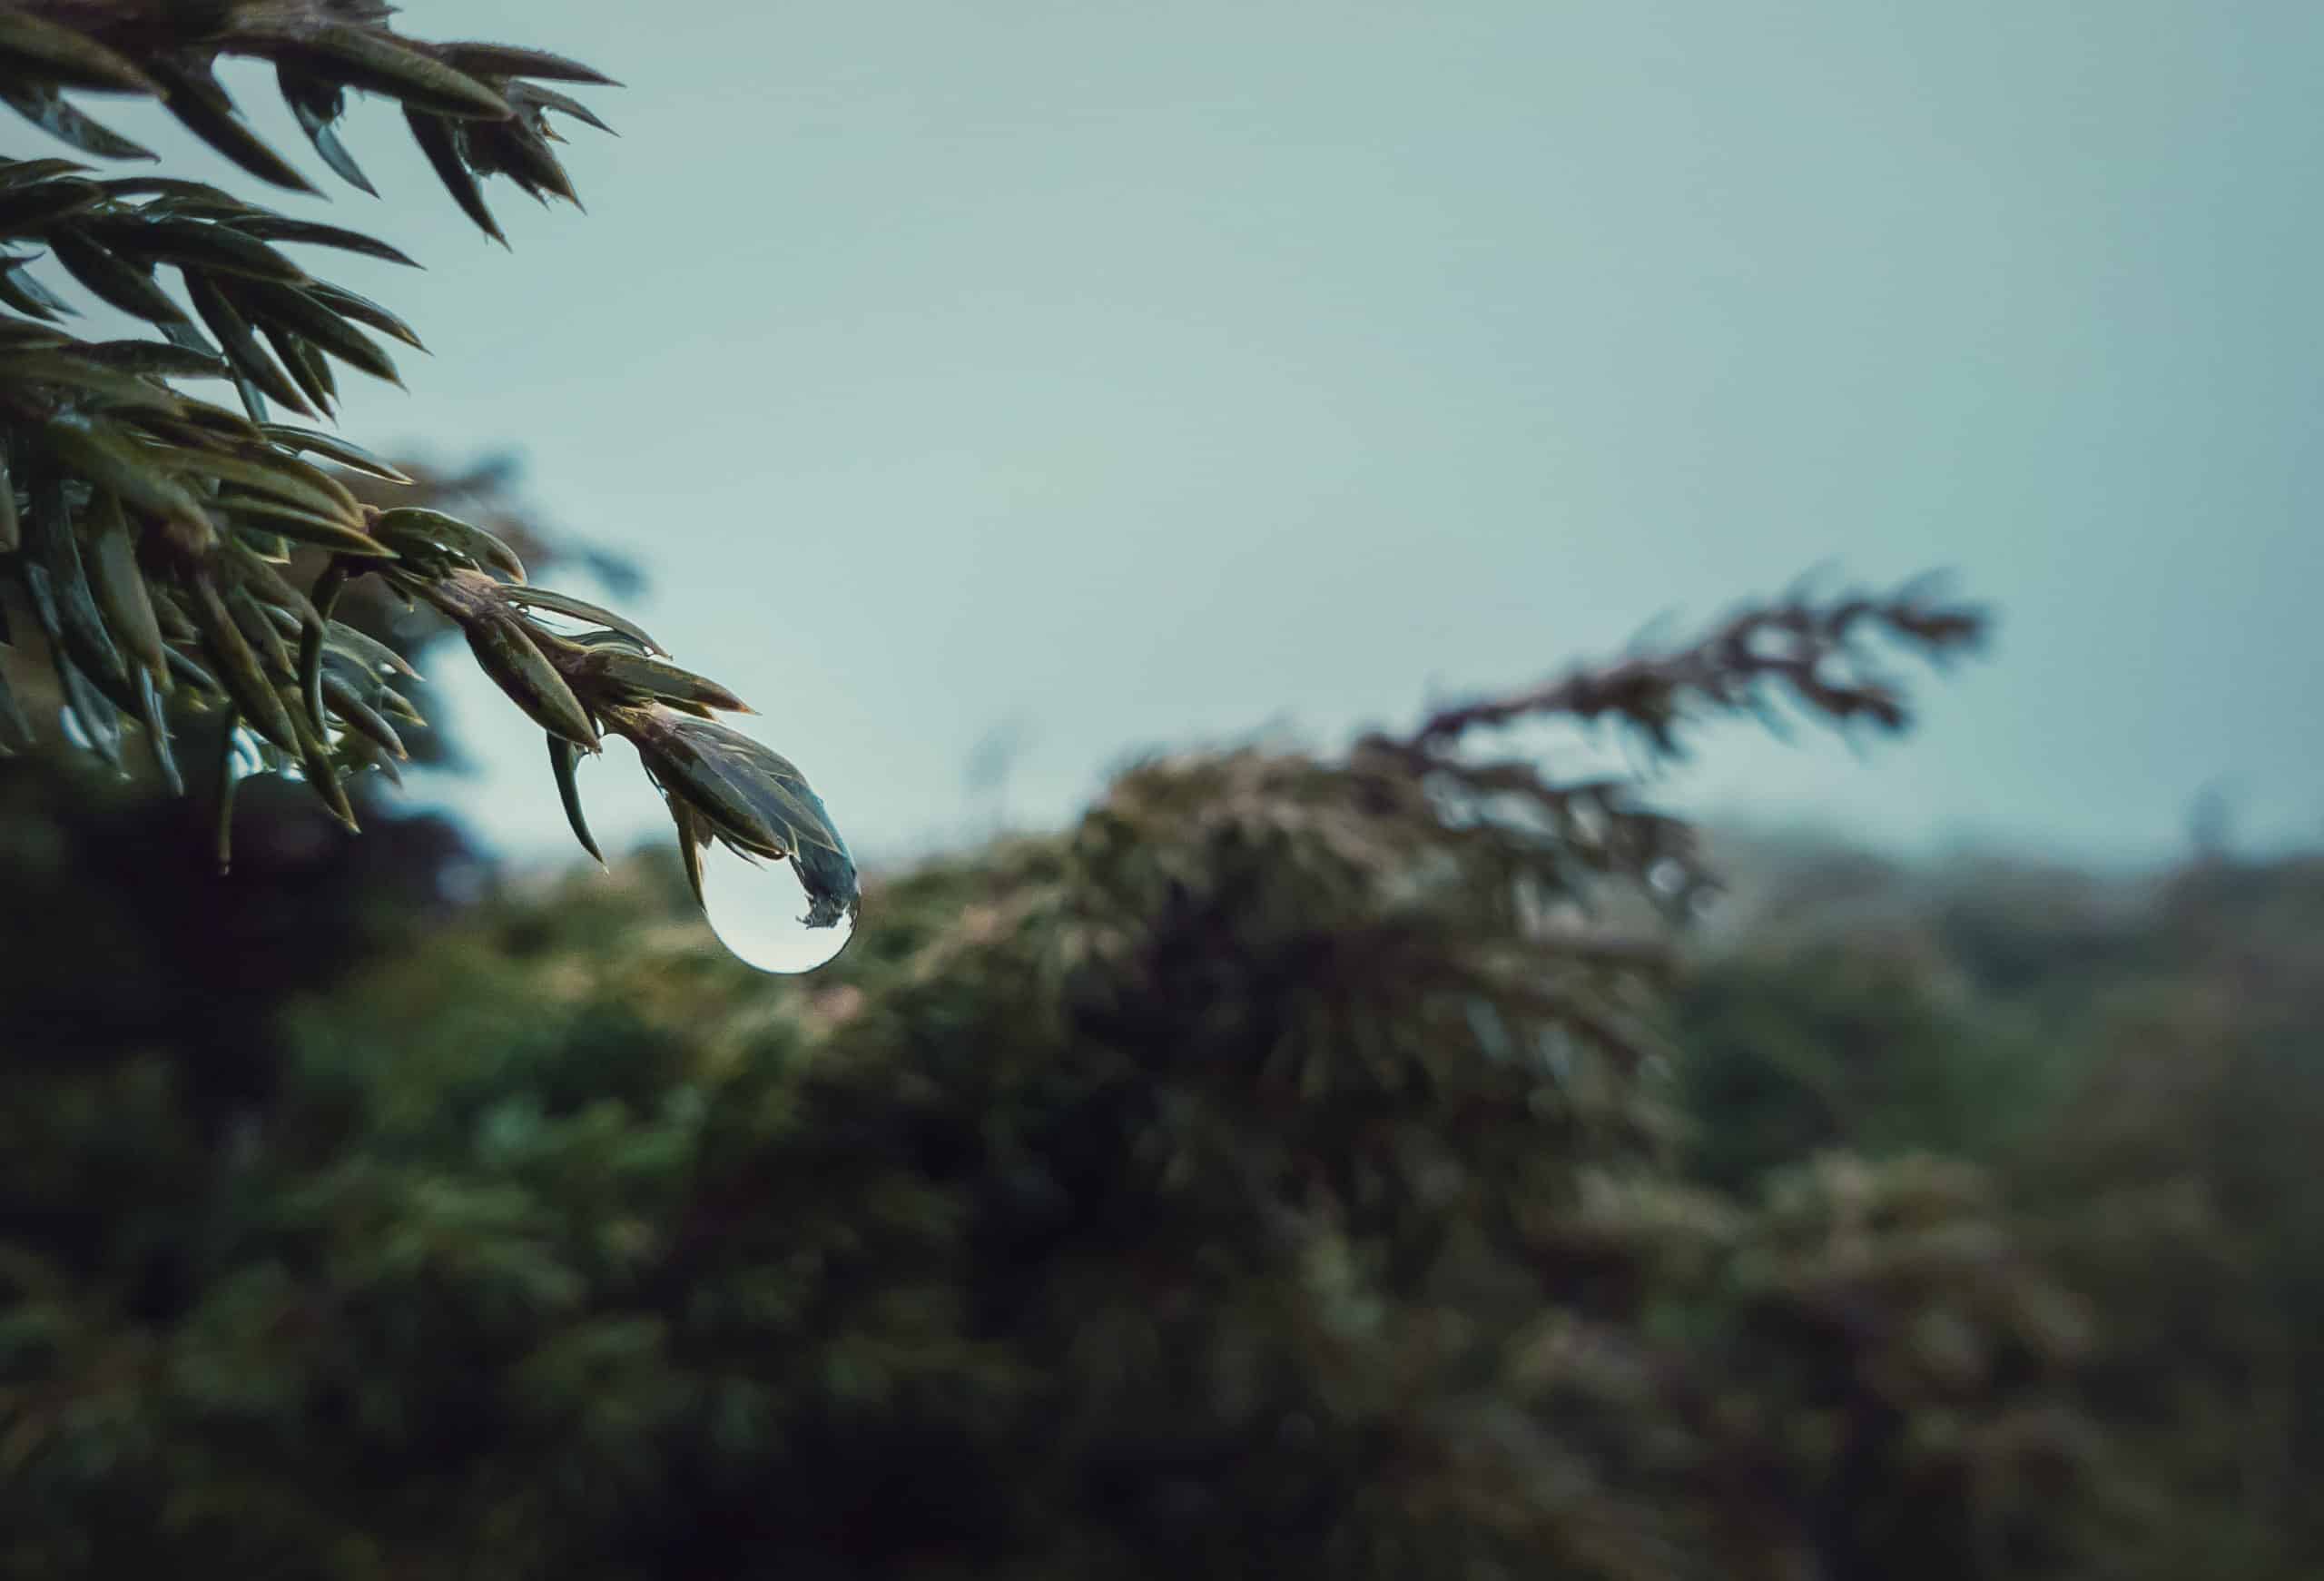 Dew raindrops hang on coniferous bush branches.